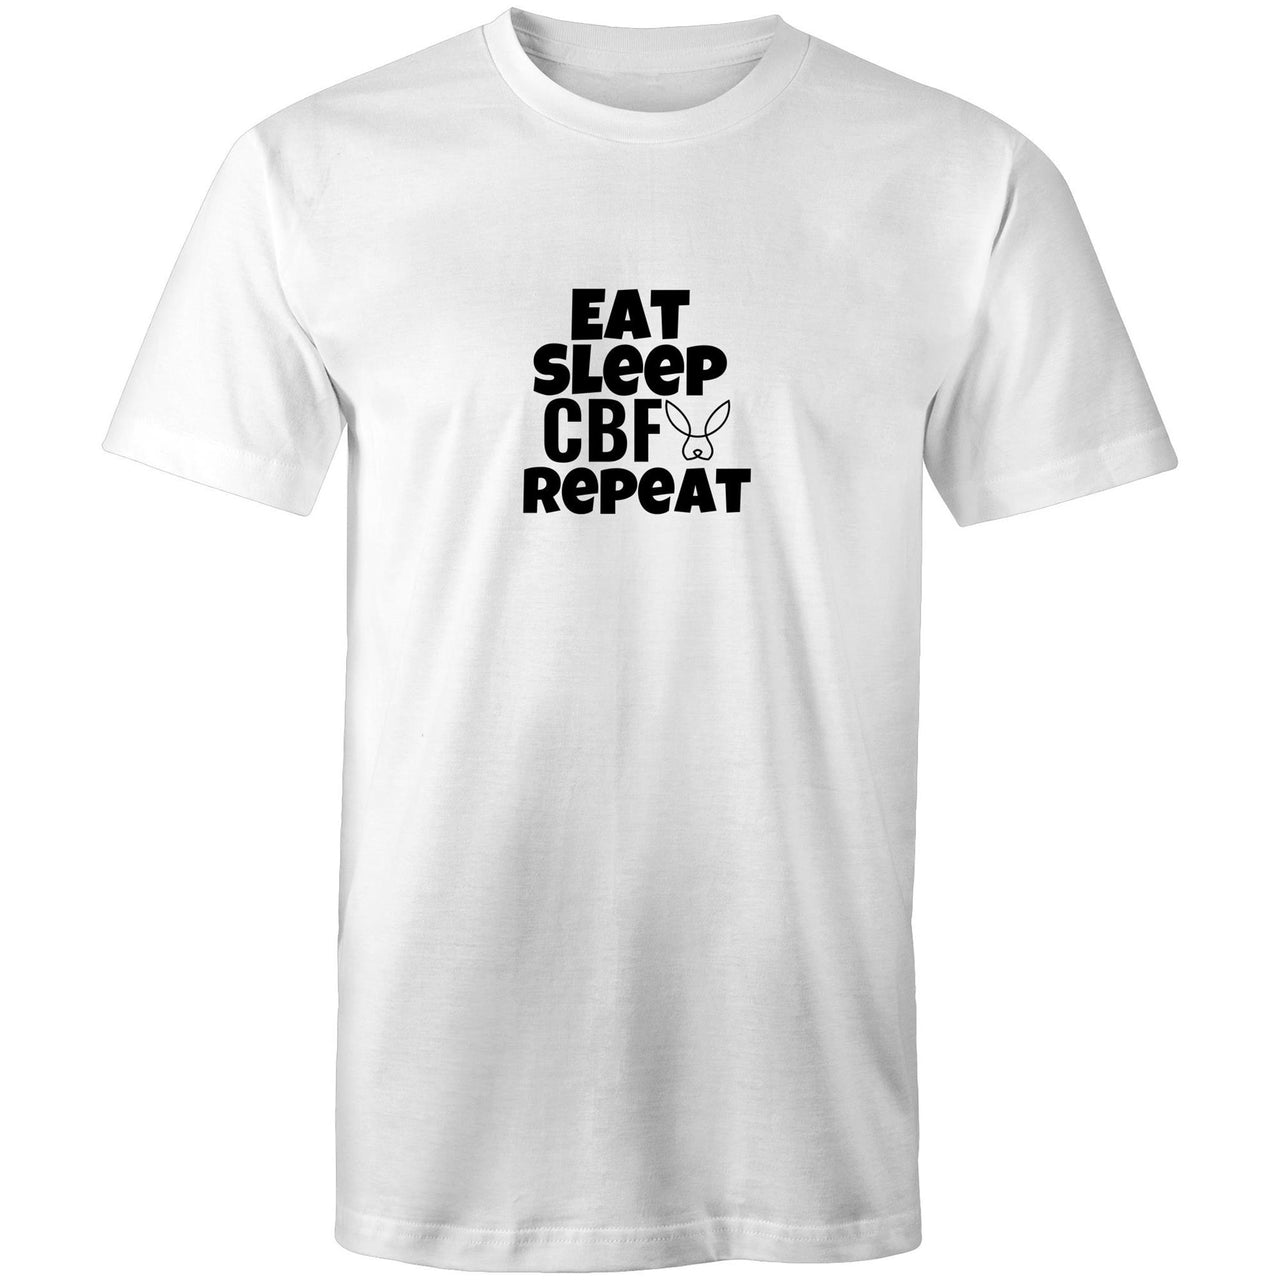 Eat Sleep CBF Repeat Crew White T-Shirt by CBF Clothing